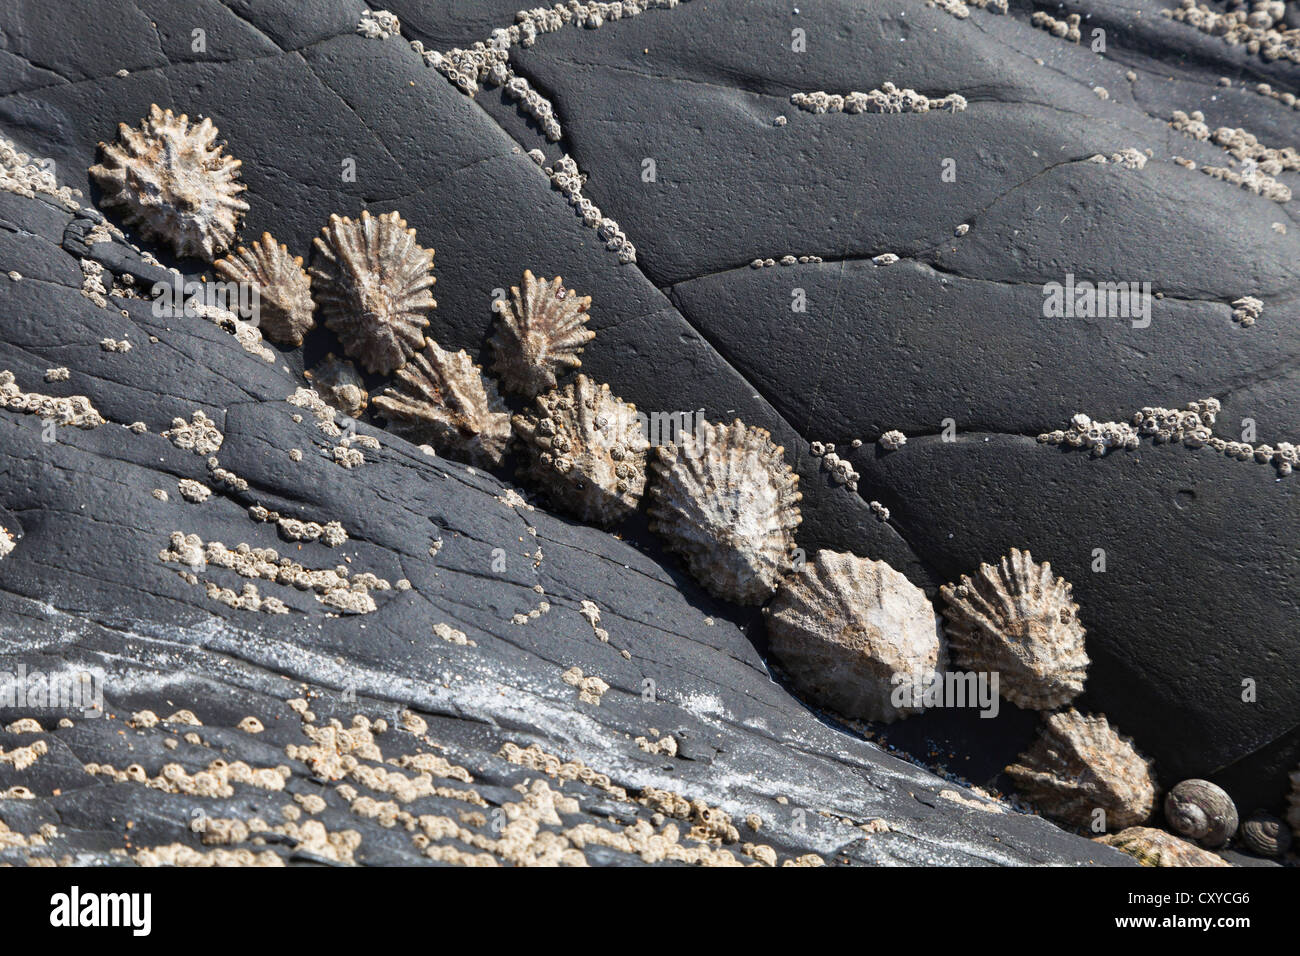 Sea snails (Patella coerulea) in the surf zone, Atlantic, Portugal, Europe Stock Photo